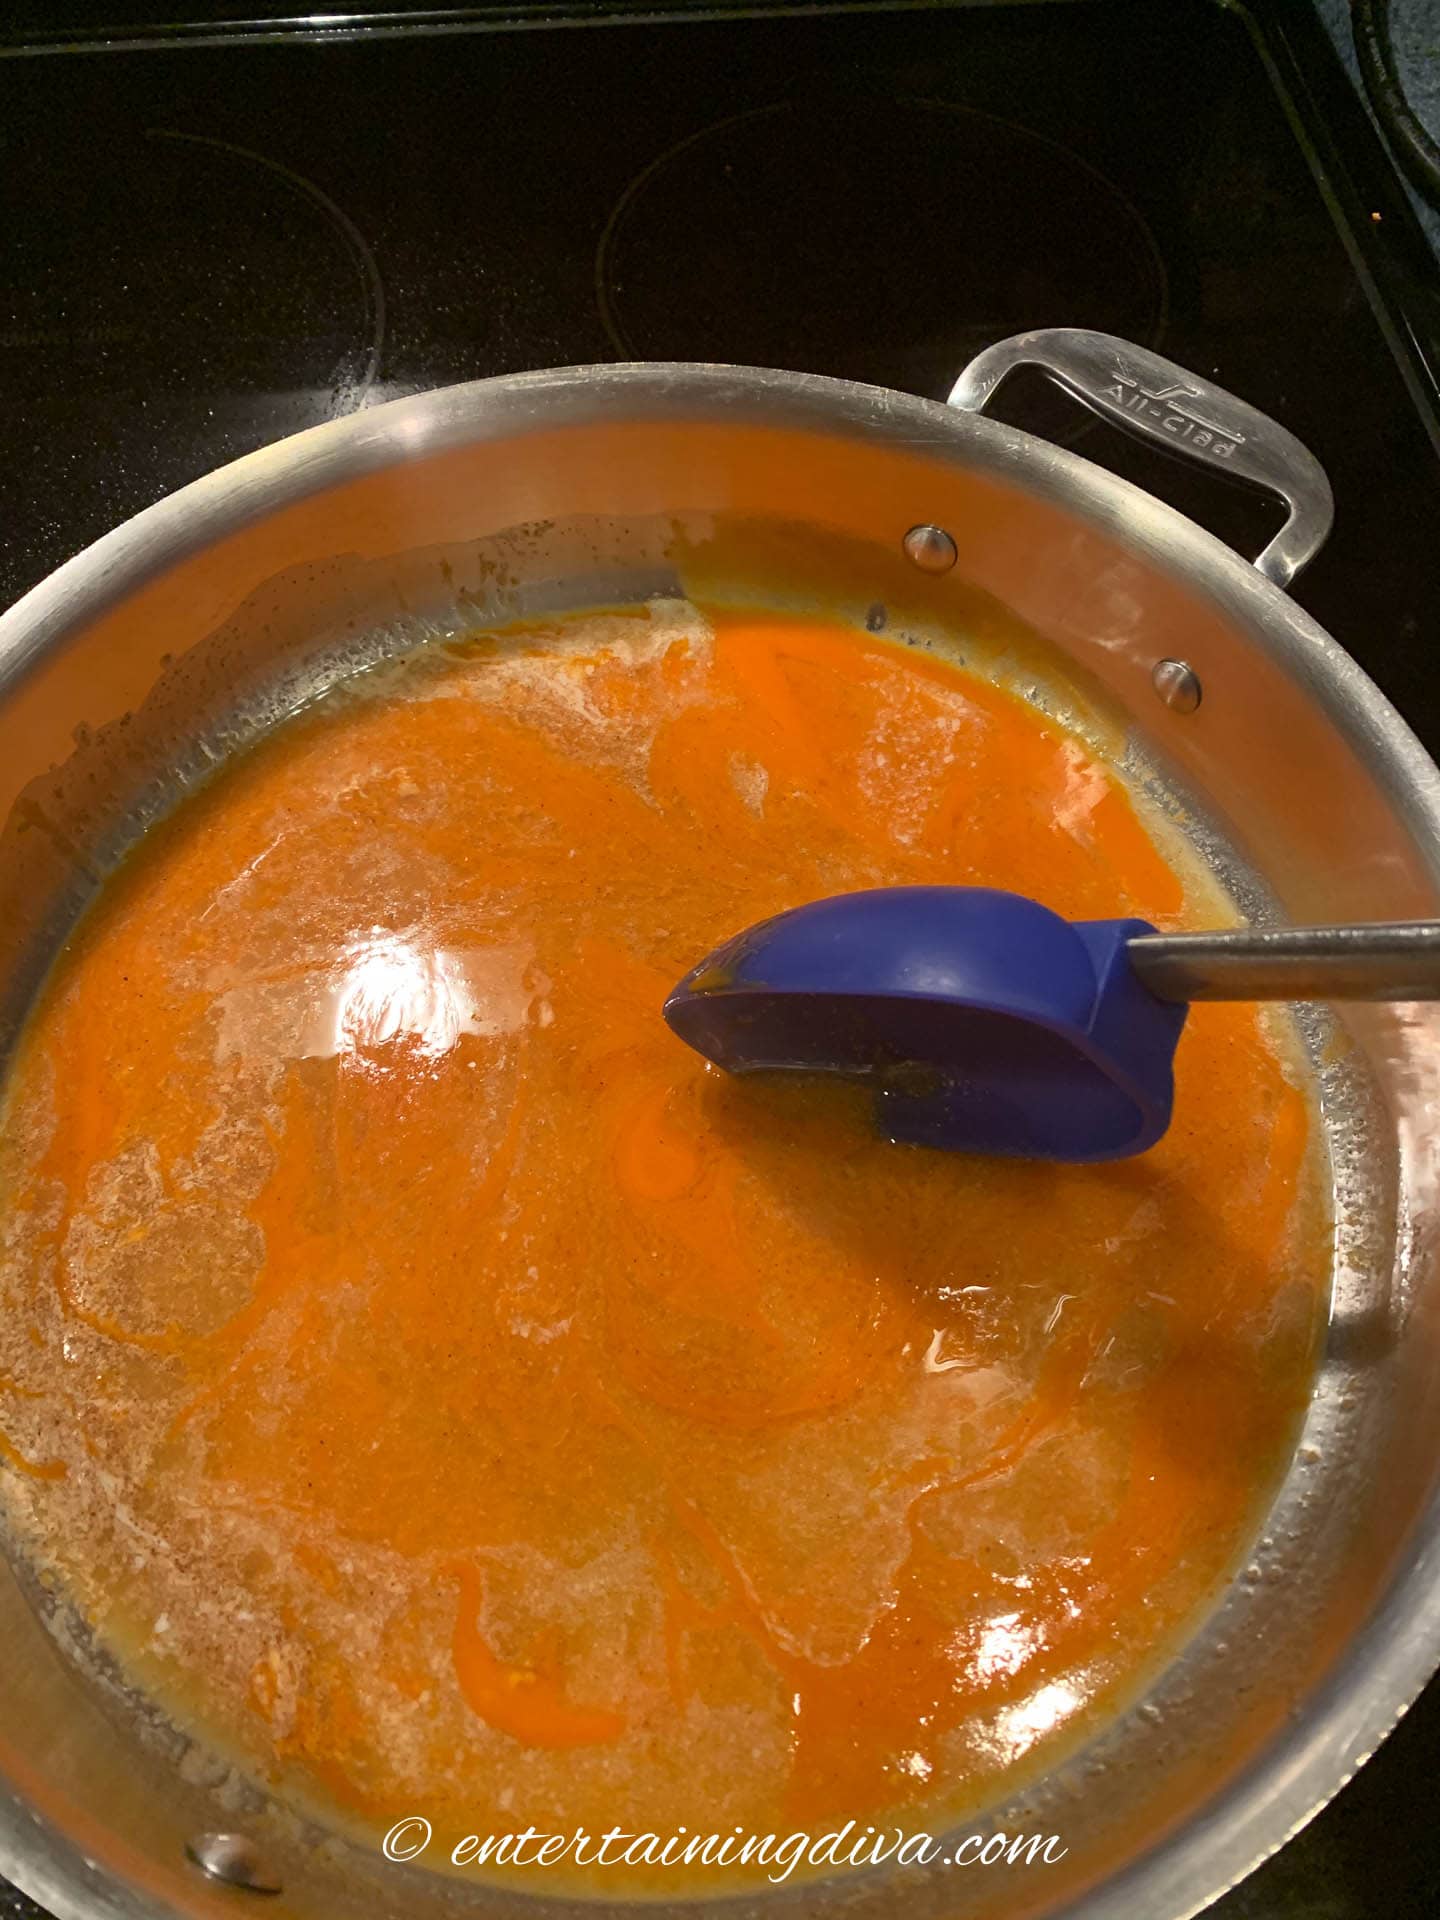 Buffalo sauce being mixed